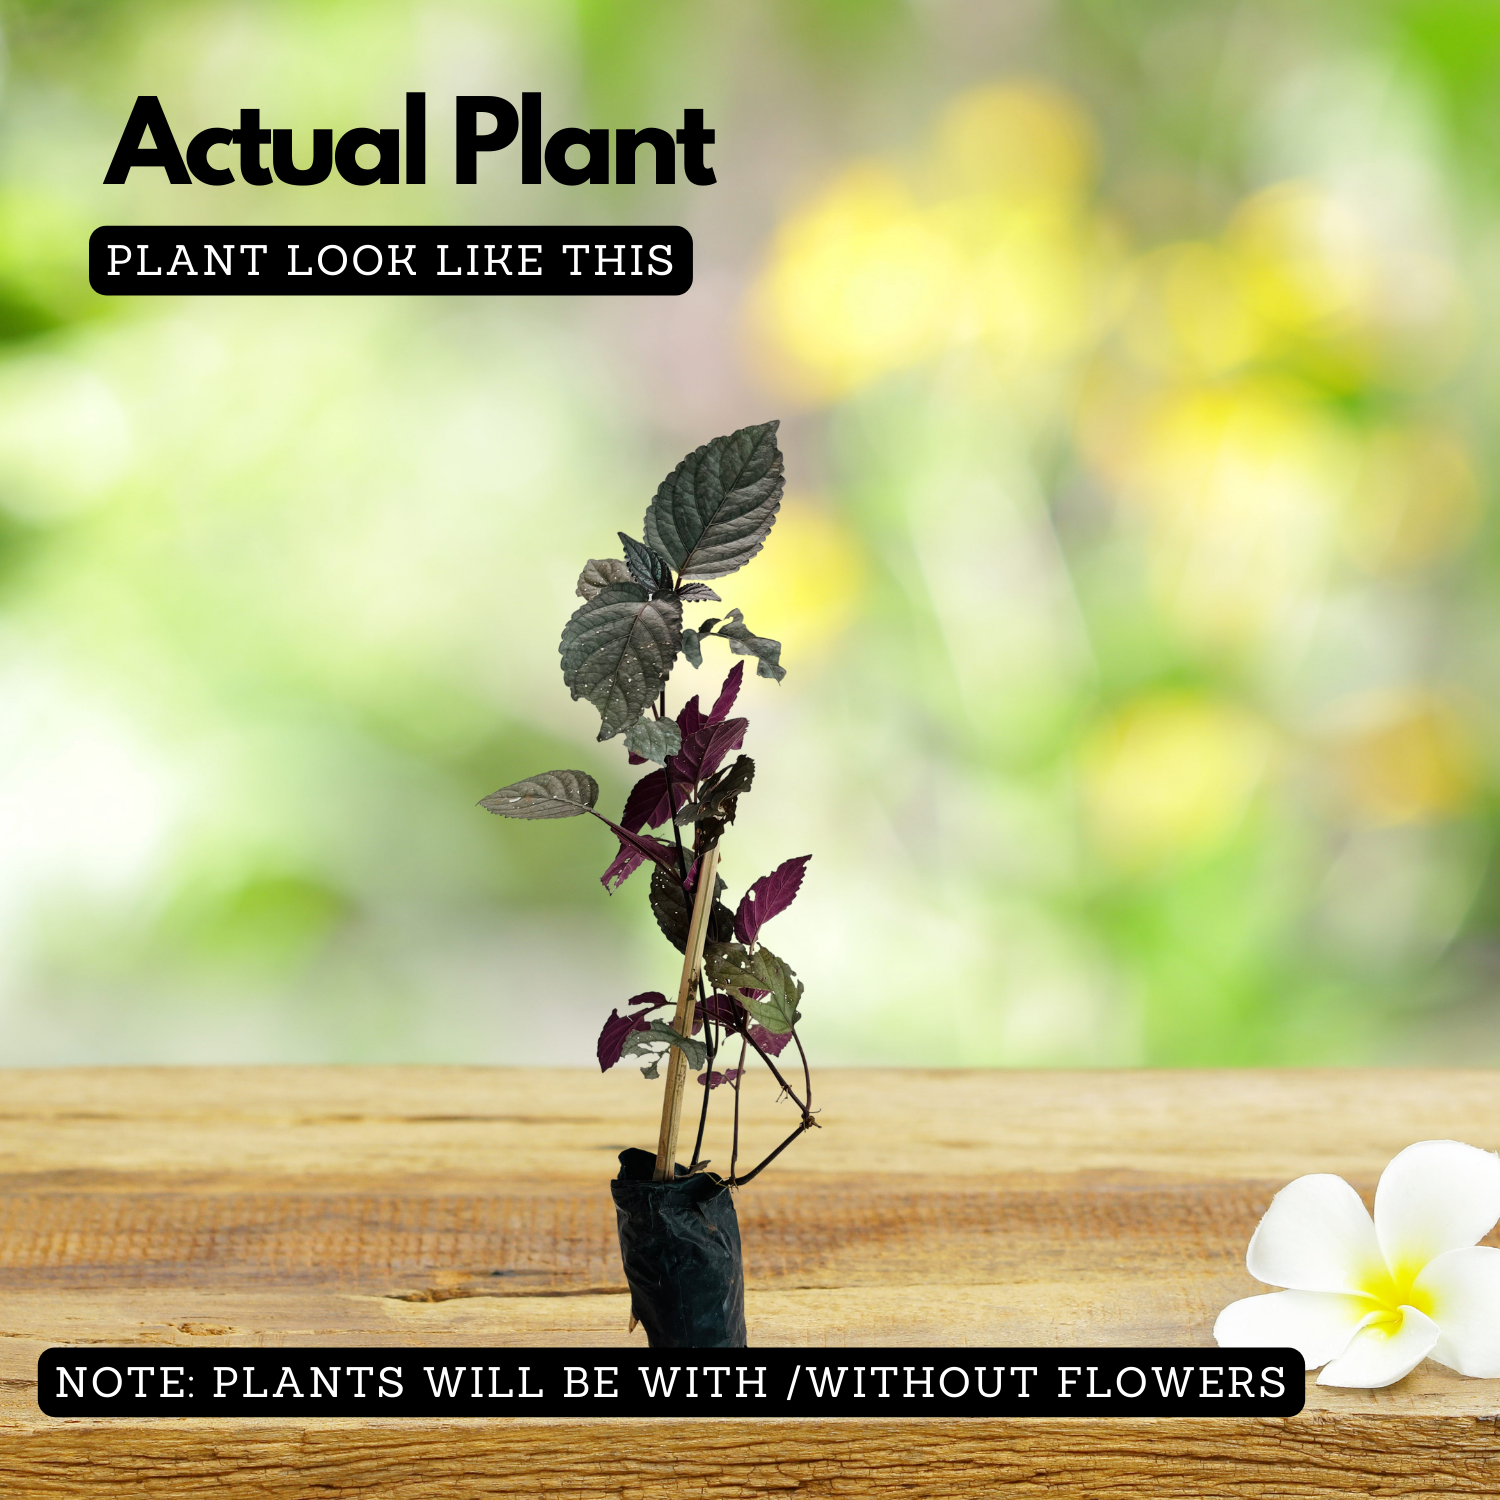 Murikootti | Muriyan Pacha | Red-Flame Ivy (Hemigraphis colorata) Ornamental/Medicinal Live Plant (Home & Garden)